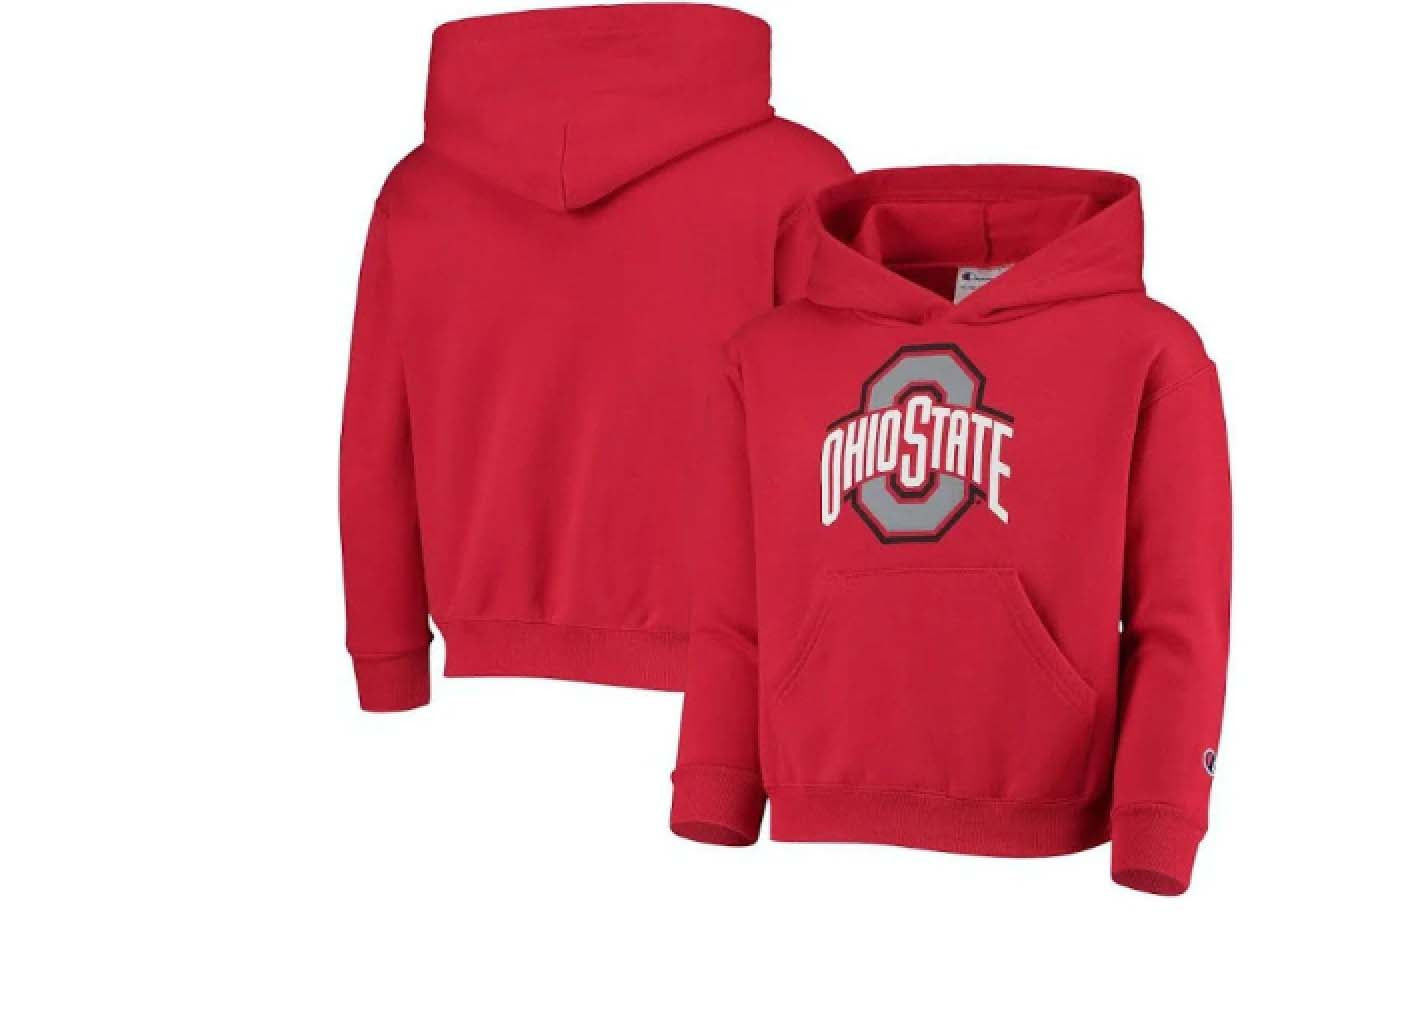 Ohio State University logo on hooded sweatshirt